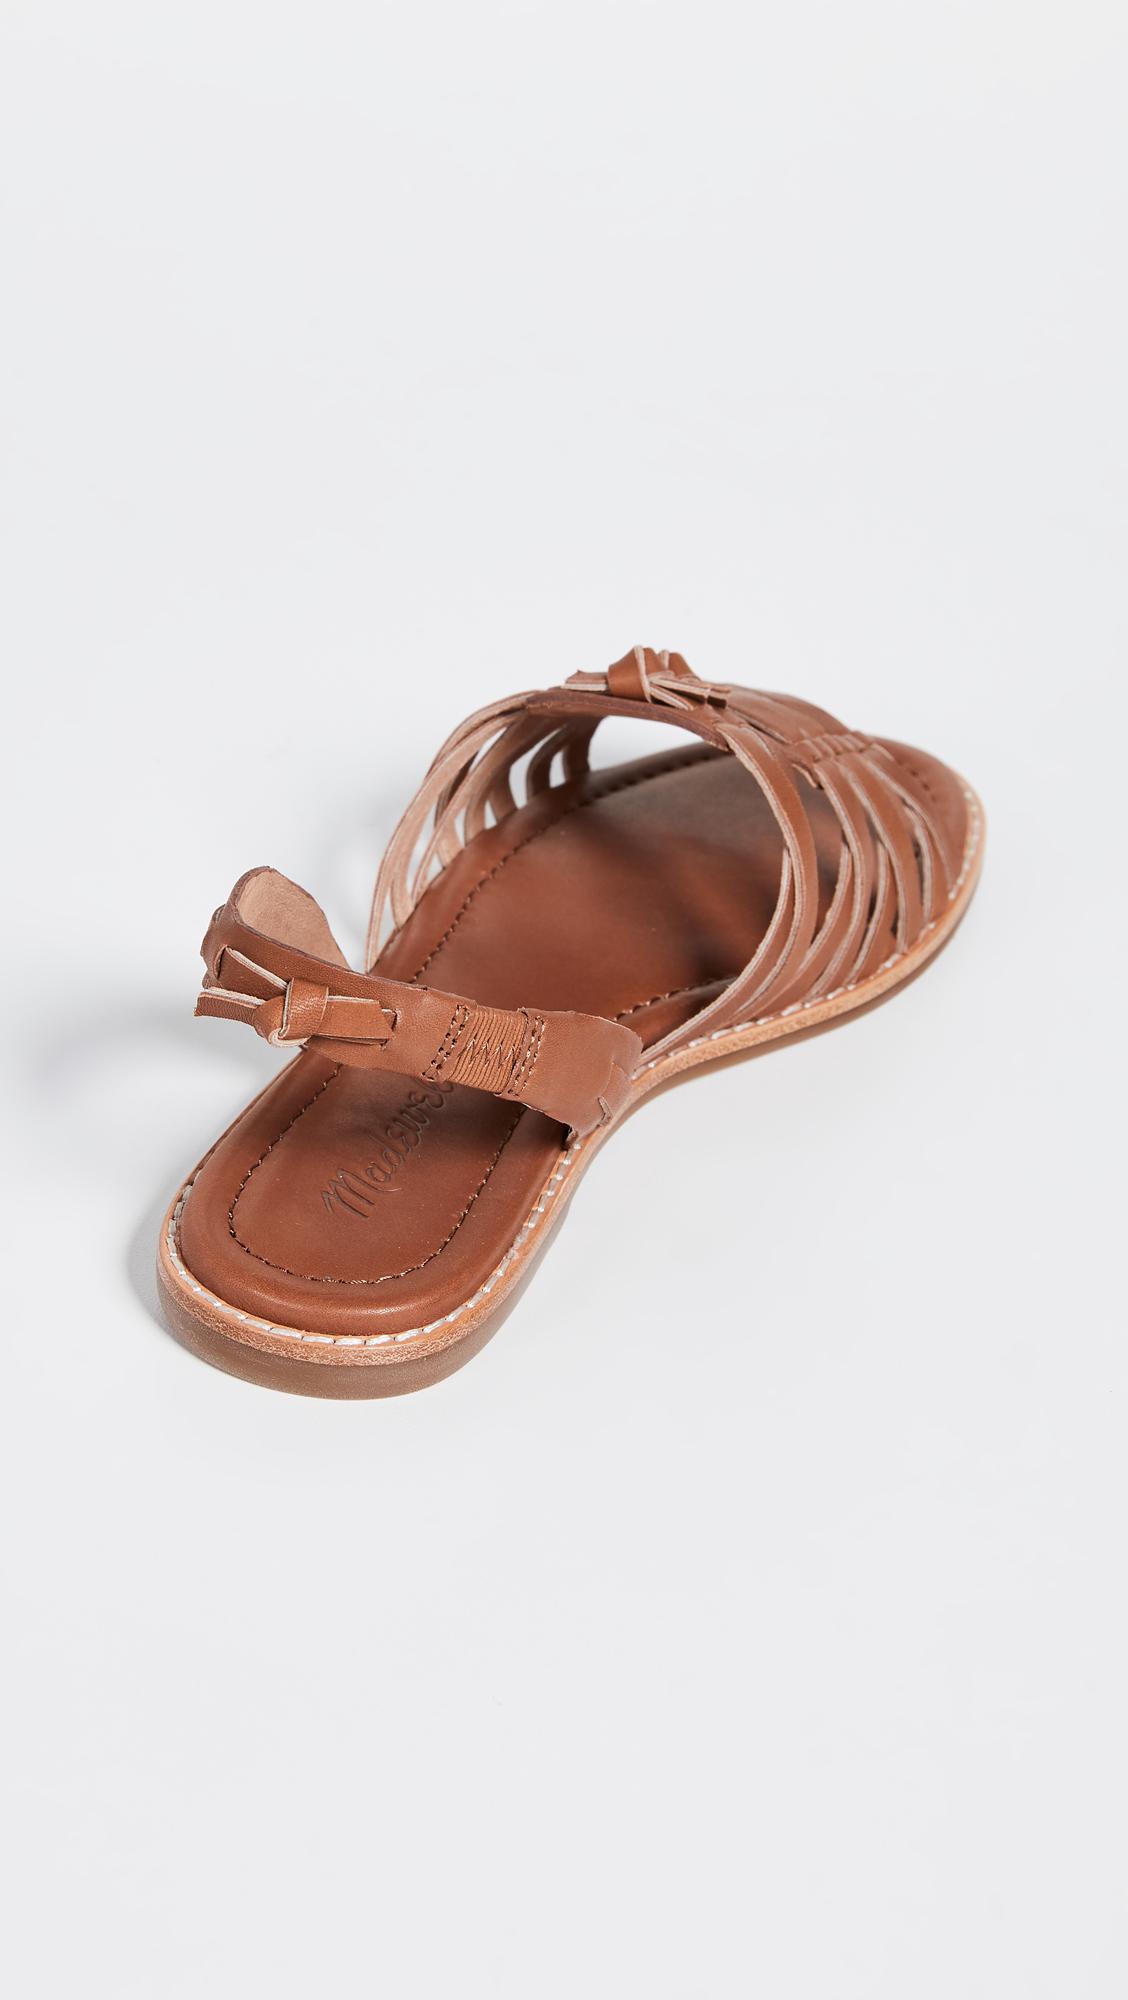 madewell huarache sandal